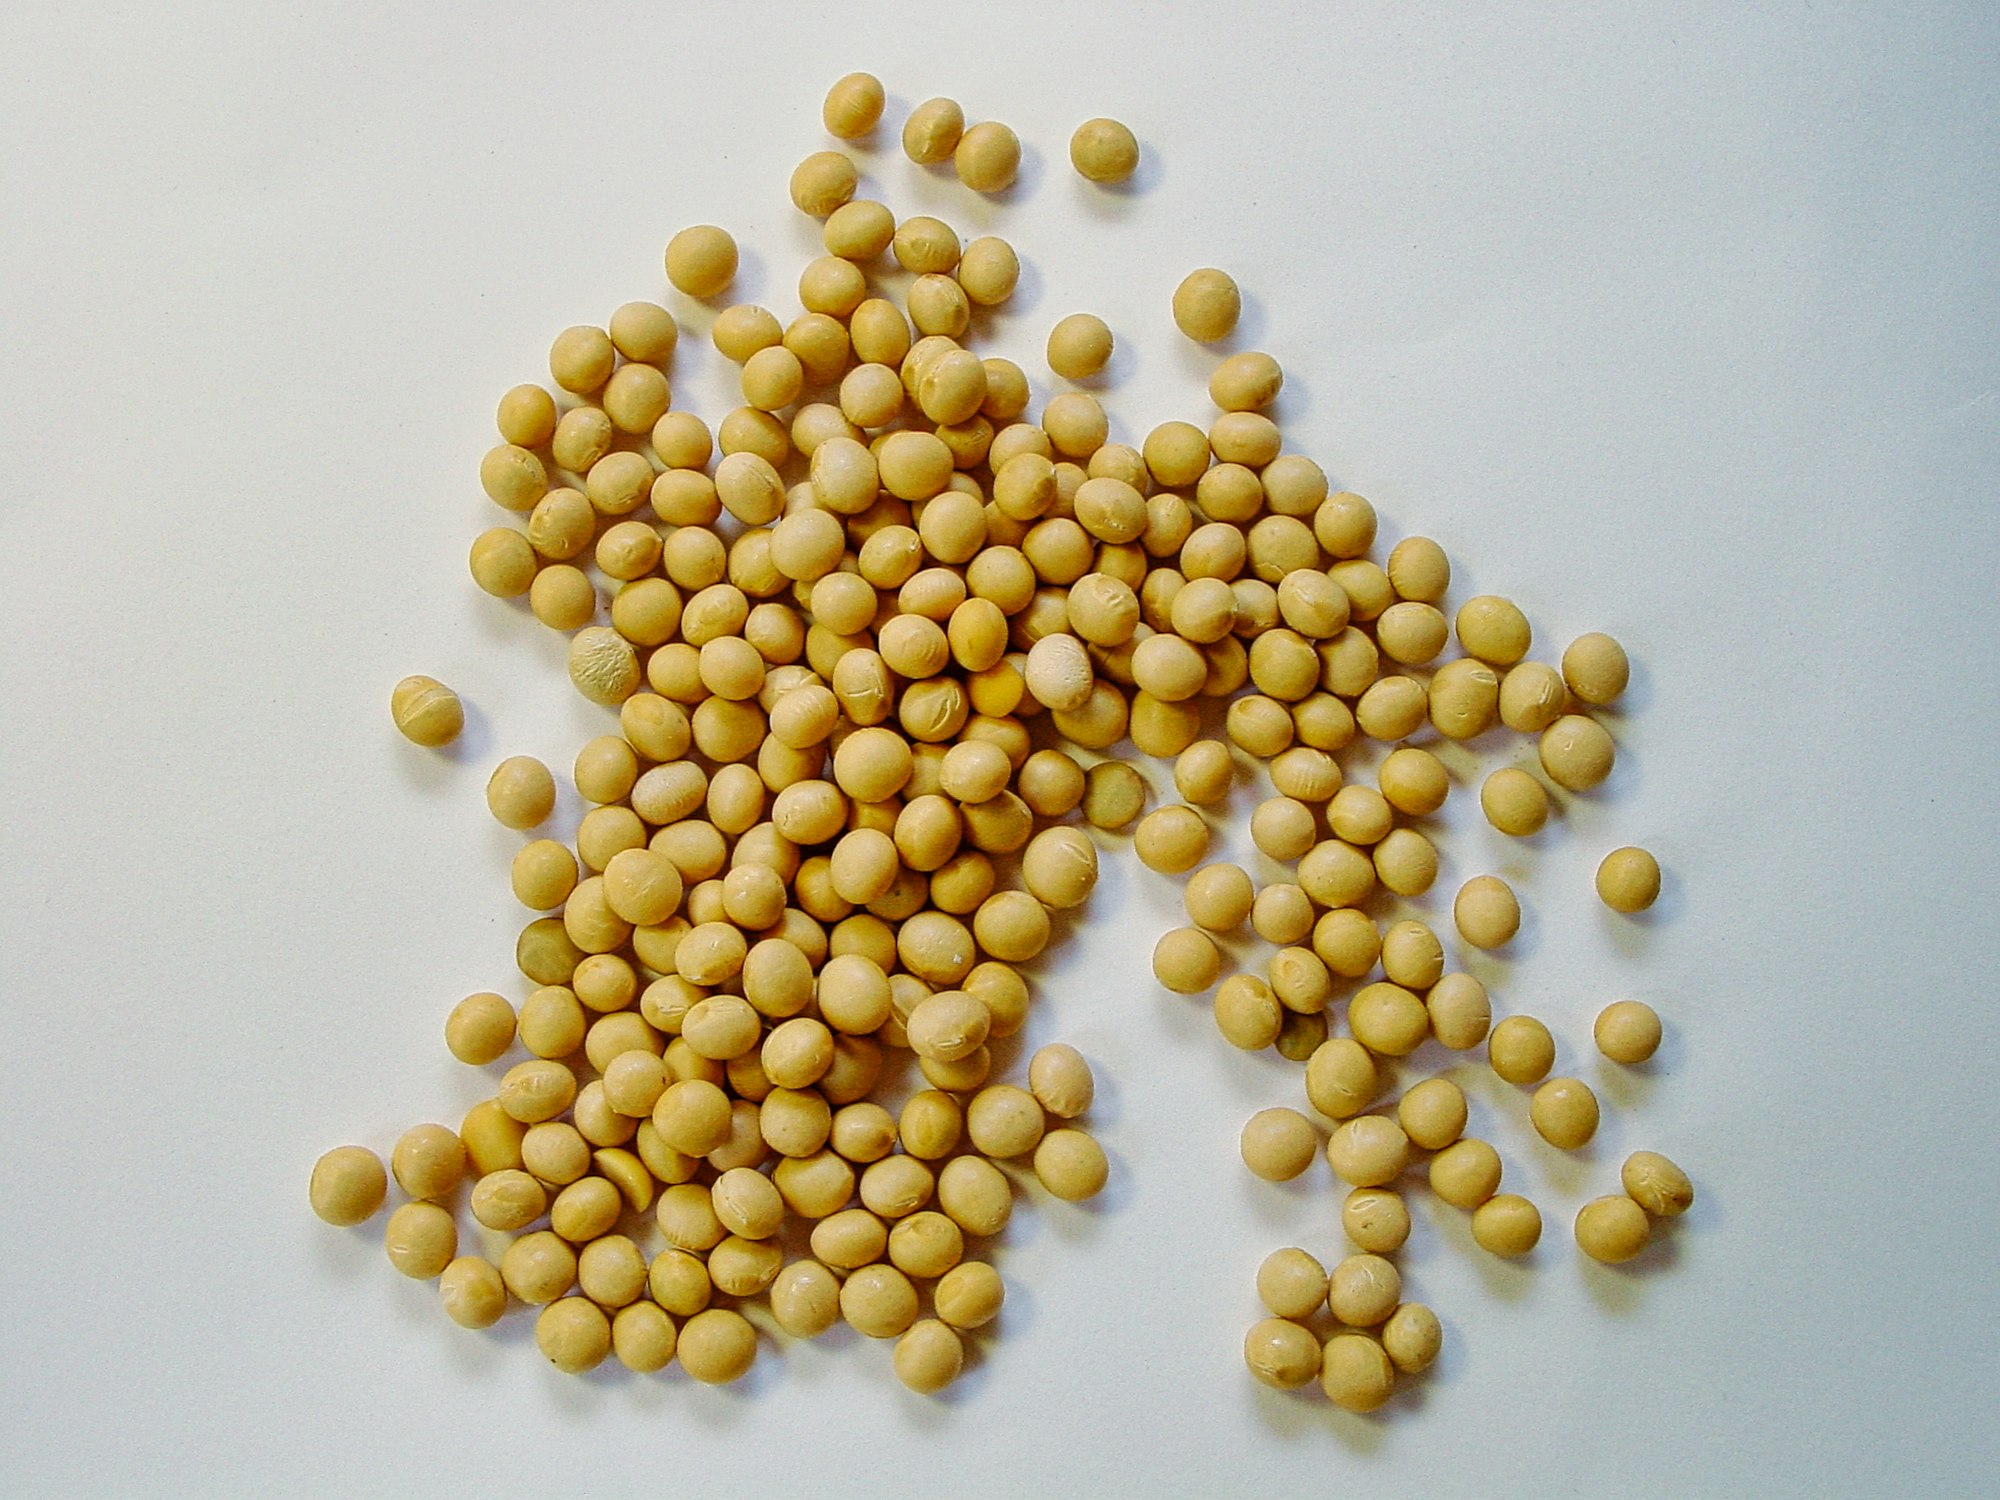 Soybean complex